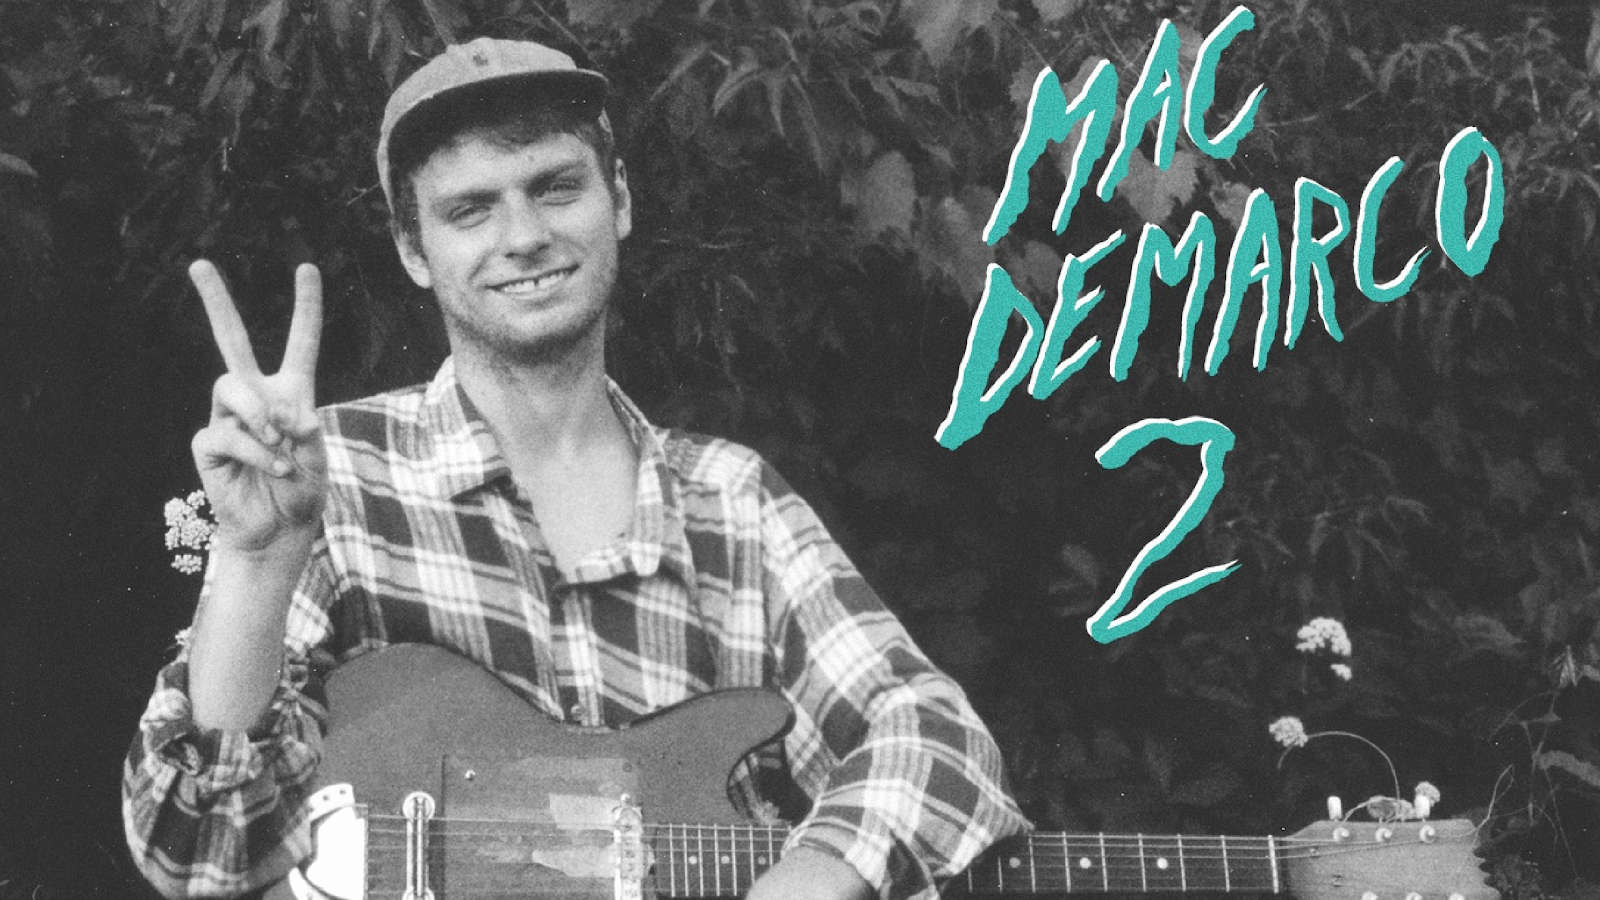 Mac Demarco - My kind of woman